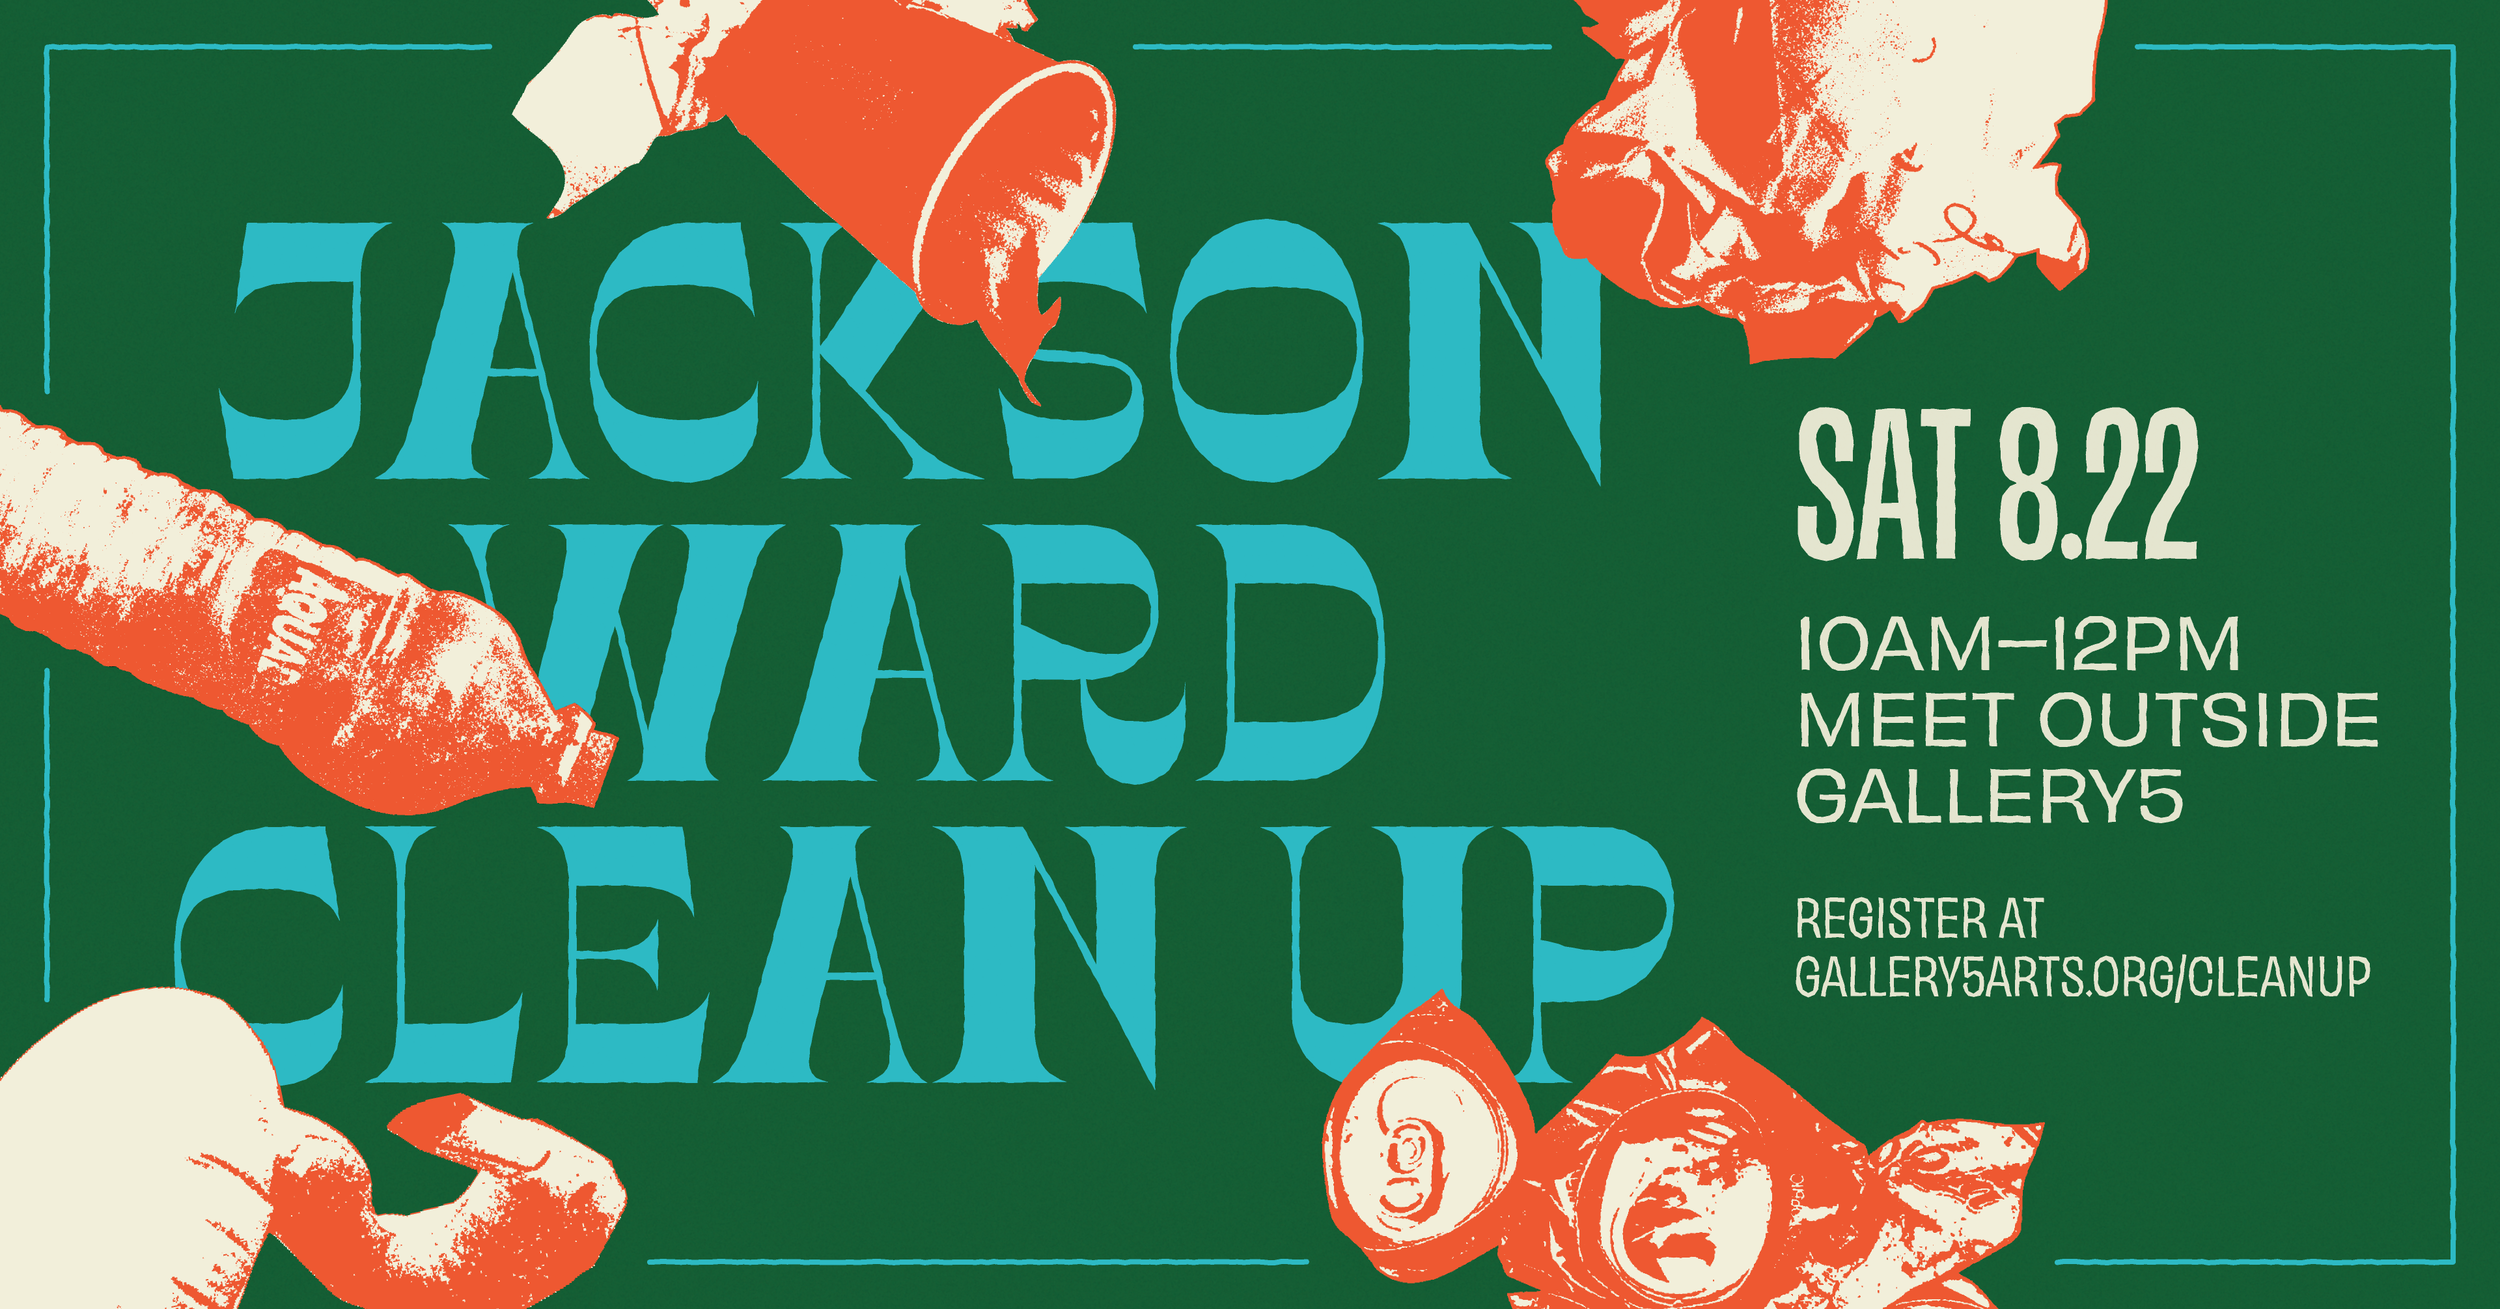 Jackson Ward Clean Up Facebook Banner